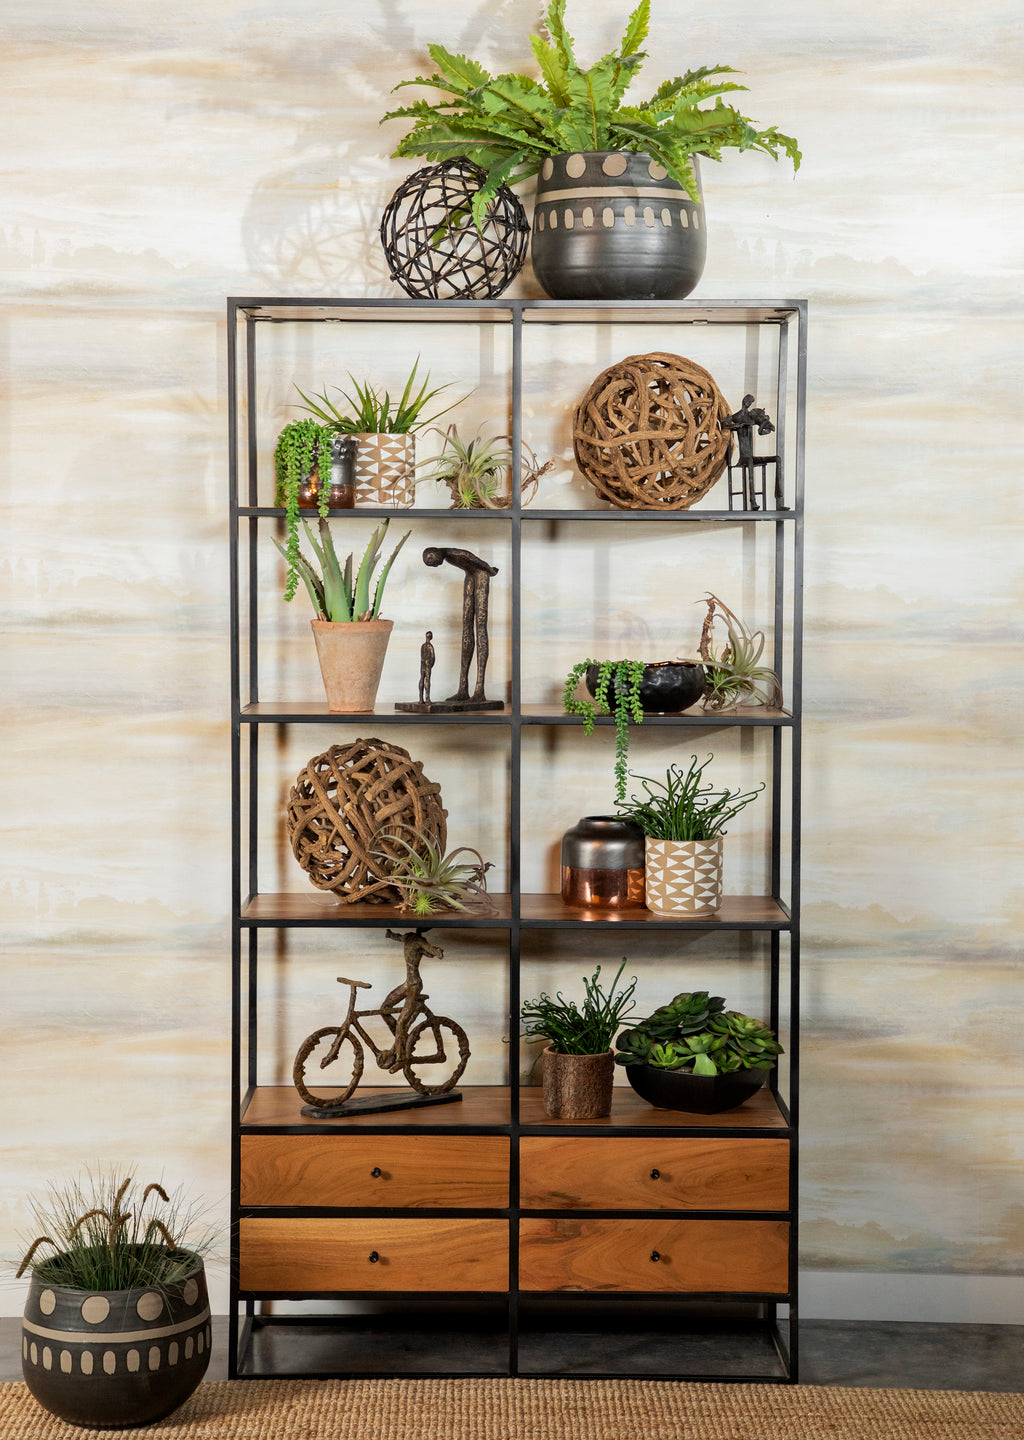 Rustic Display Shelf in Natural Wood Finish